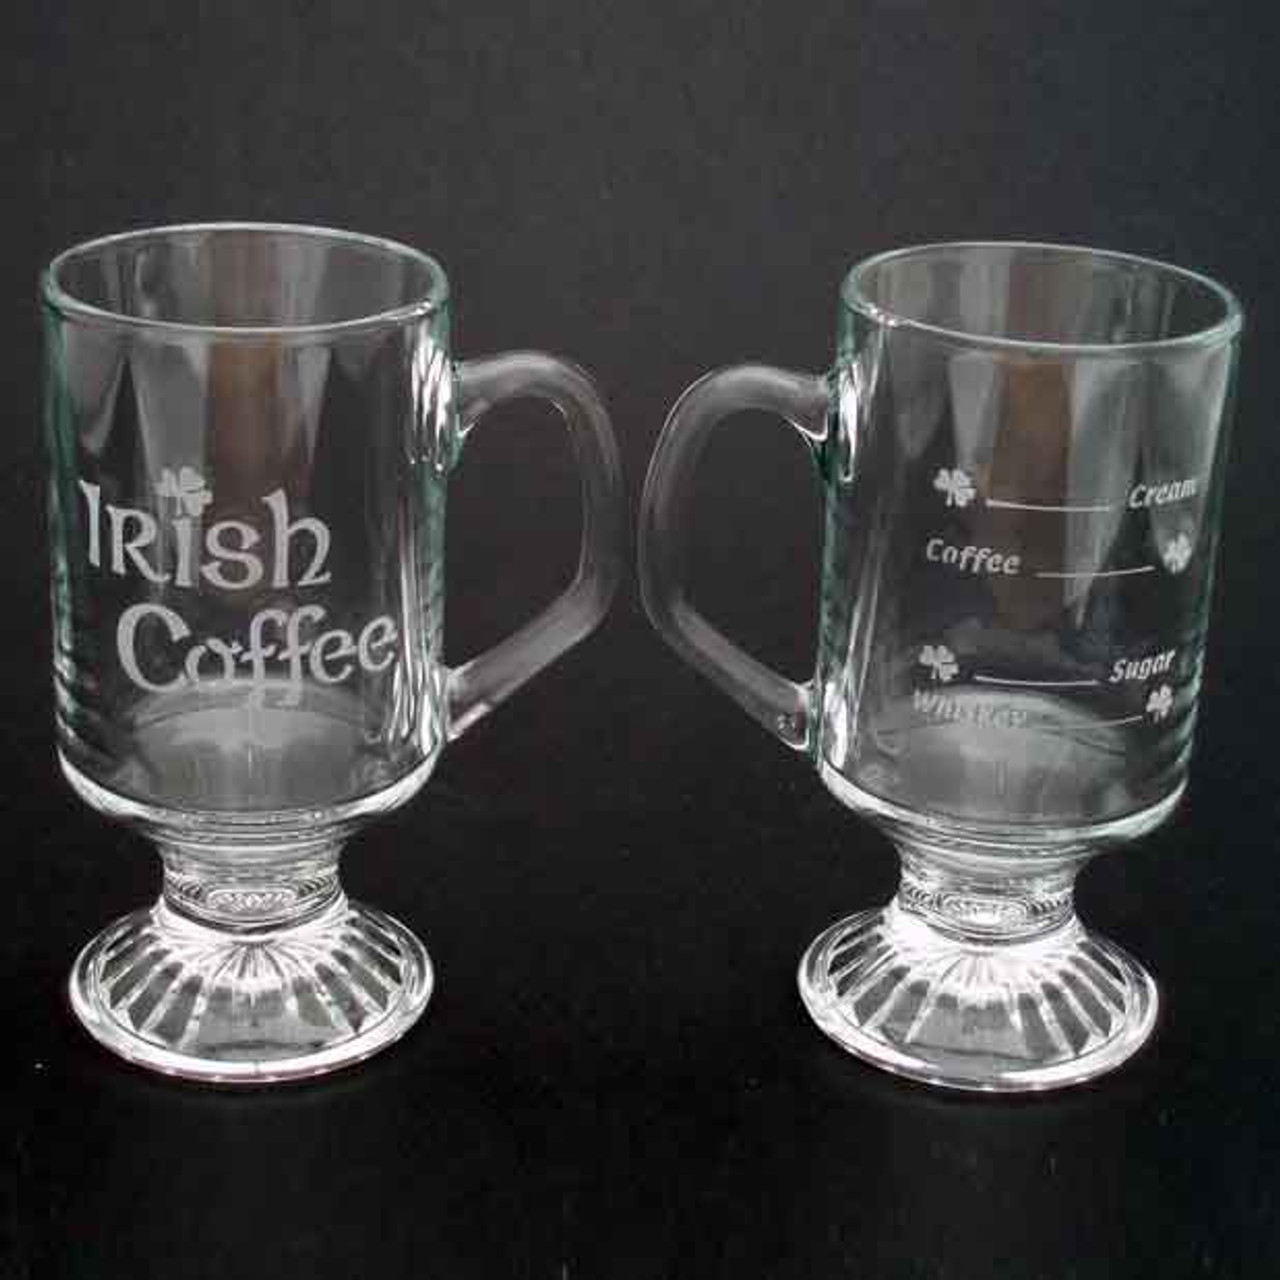 Your Own Message Personalized Glass Irish Coffee Mug - 10oz